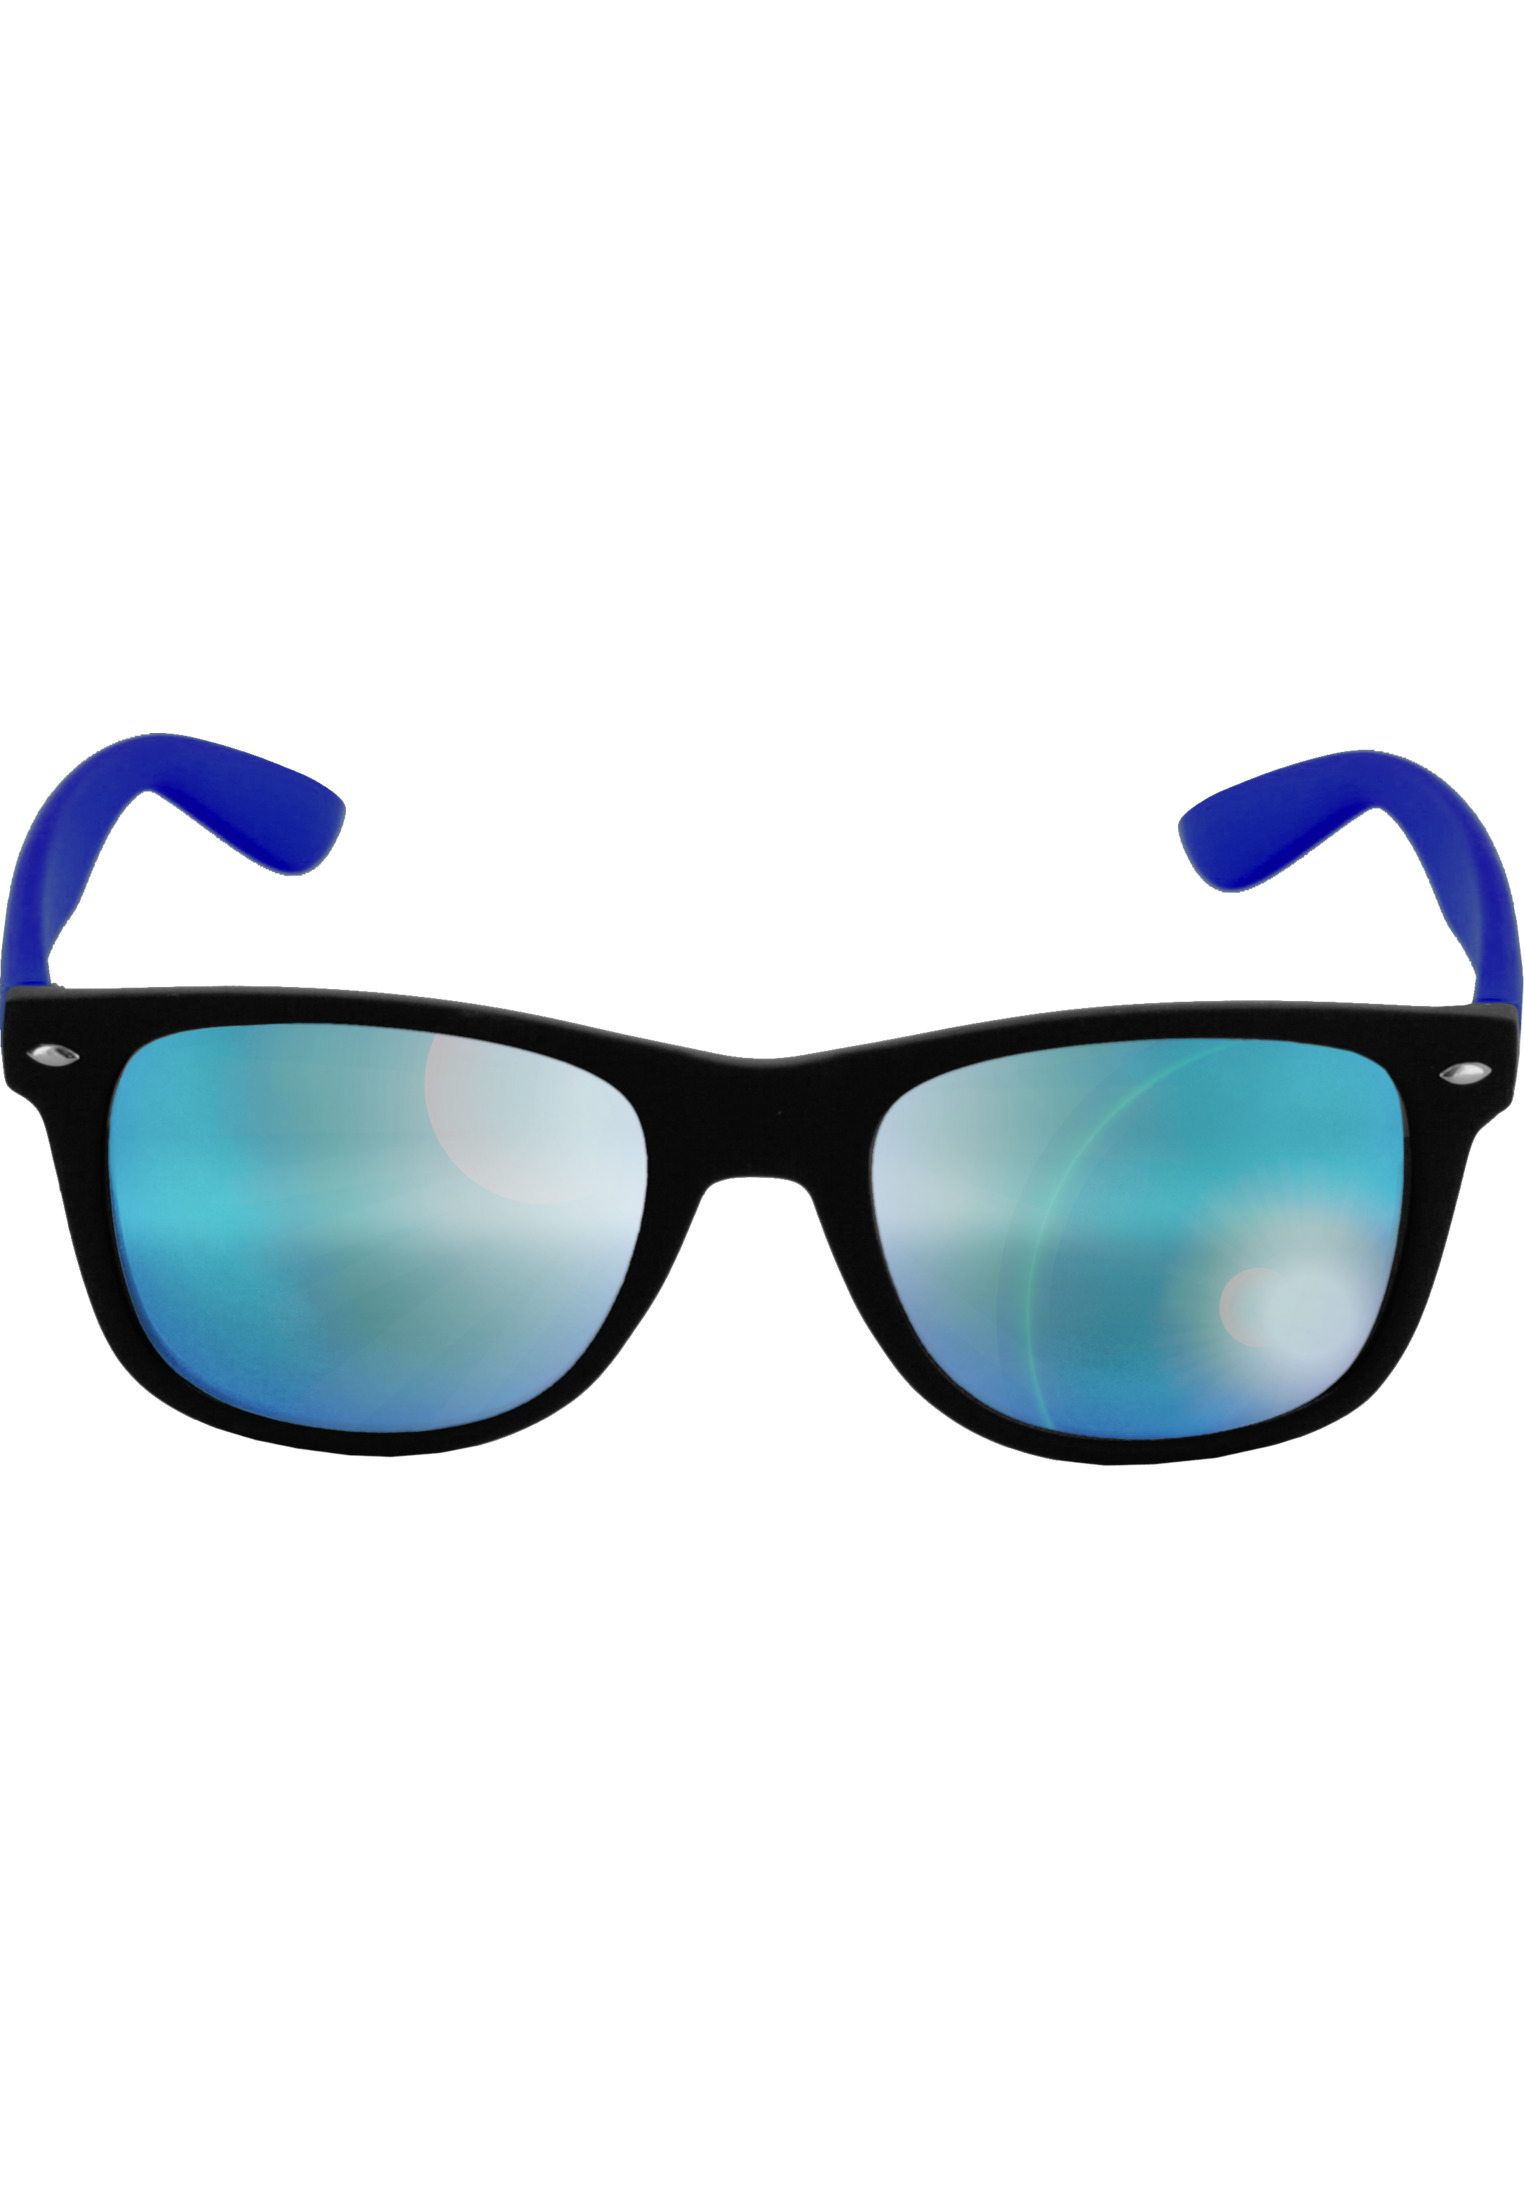 Likoma Mirror blk/royal/blue sunglasses